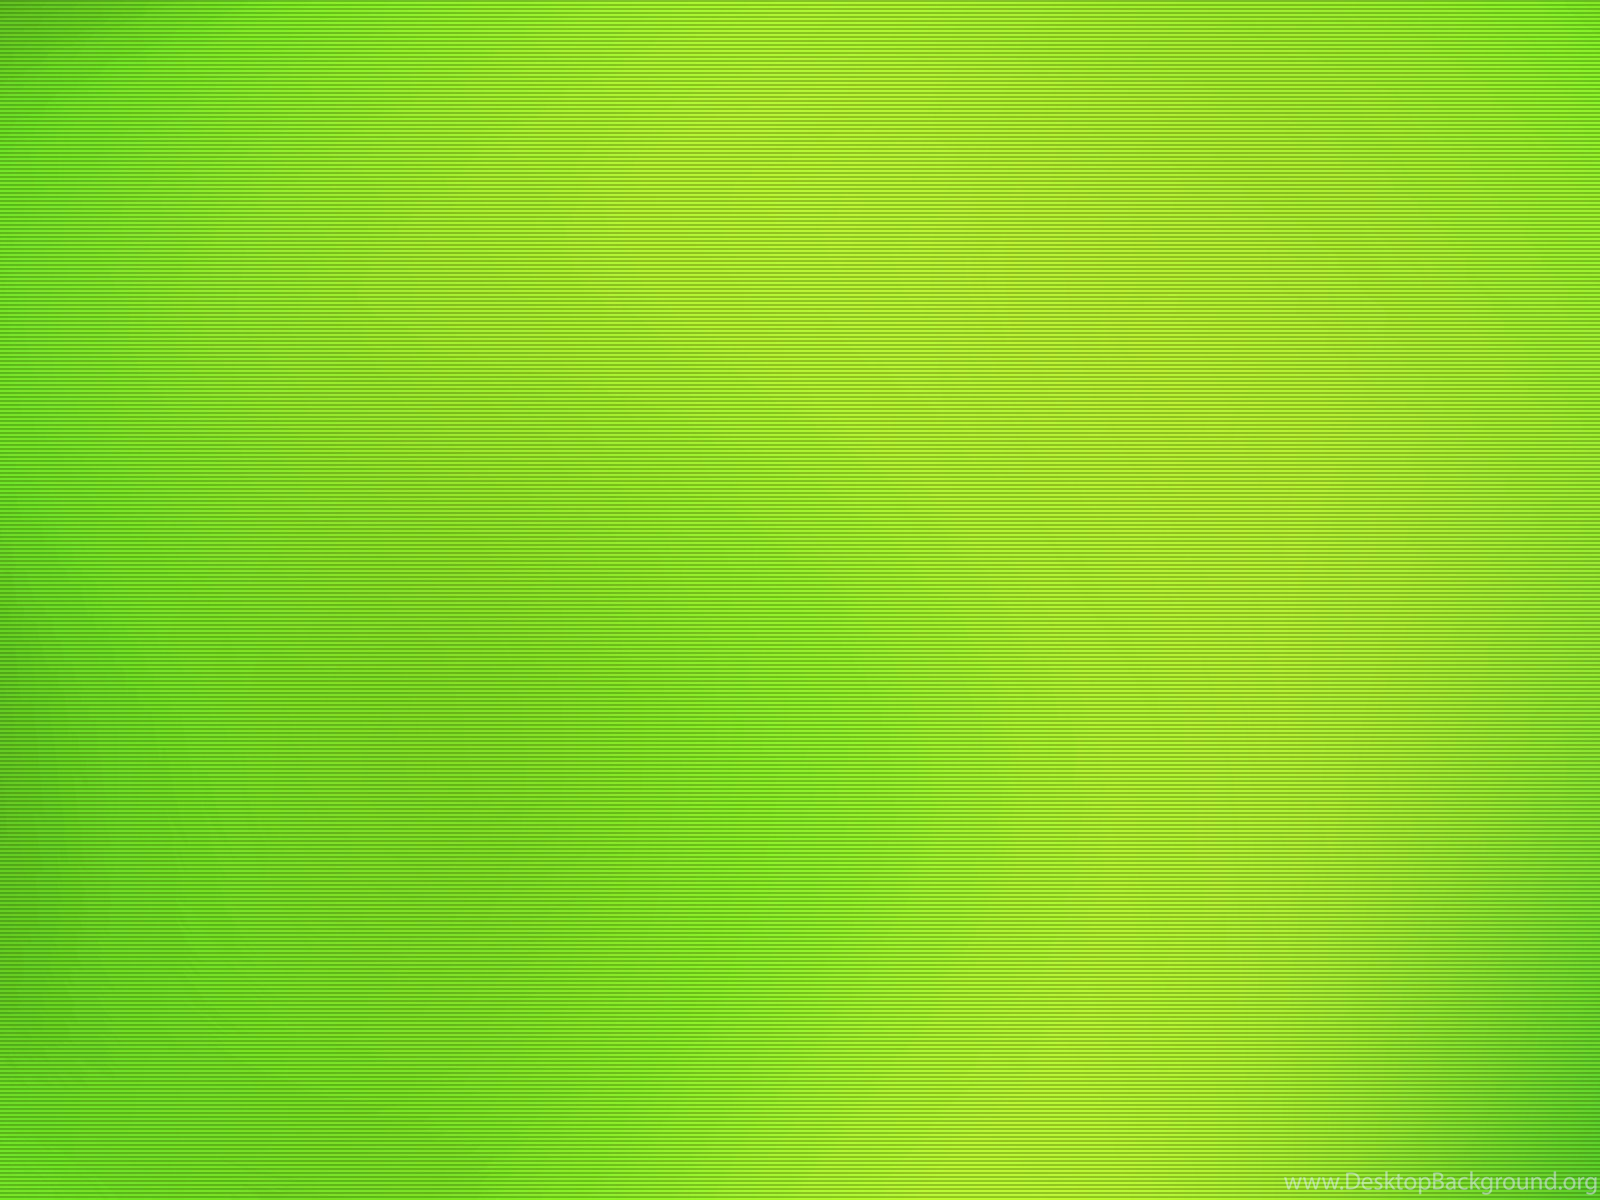 Simple Green Wallpaper Widescreen Desktop Background